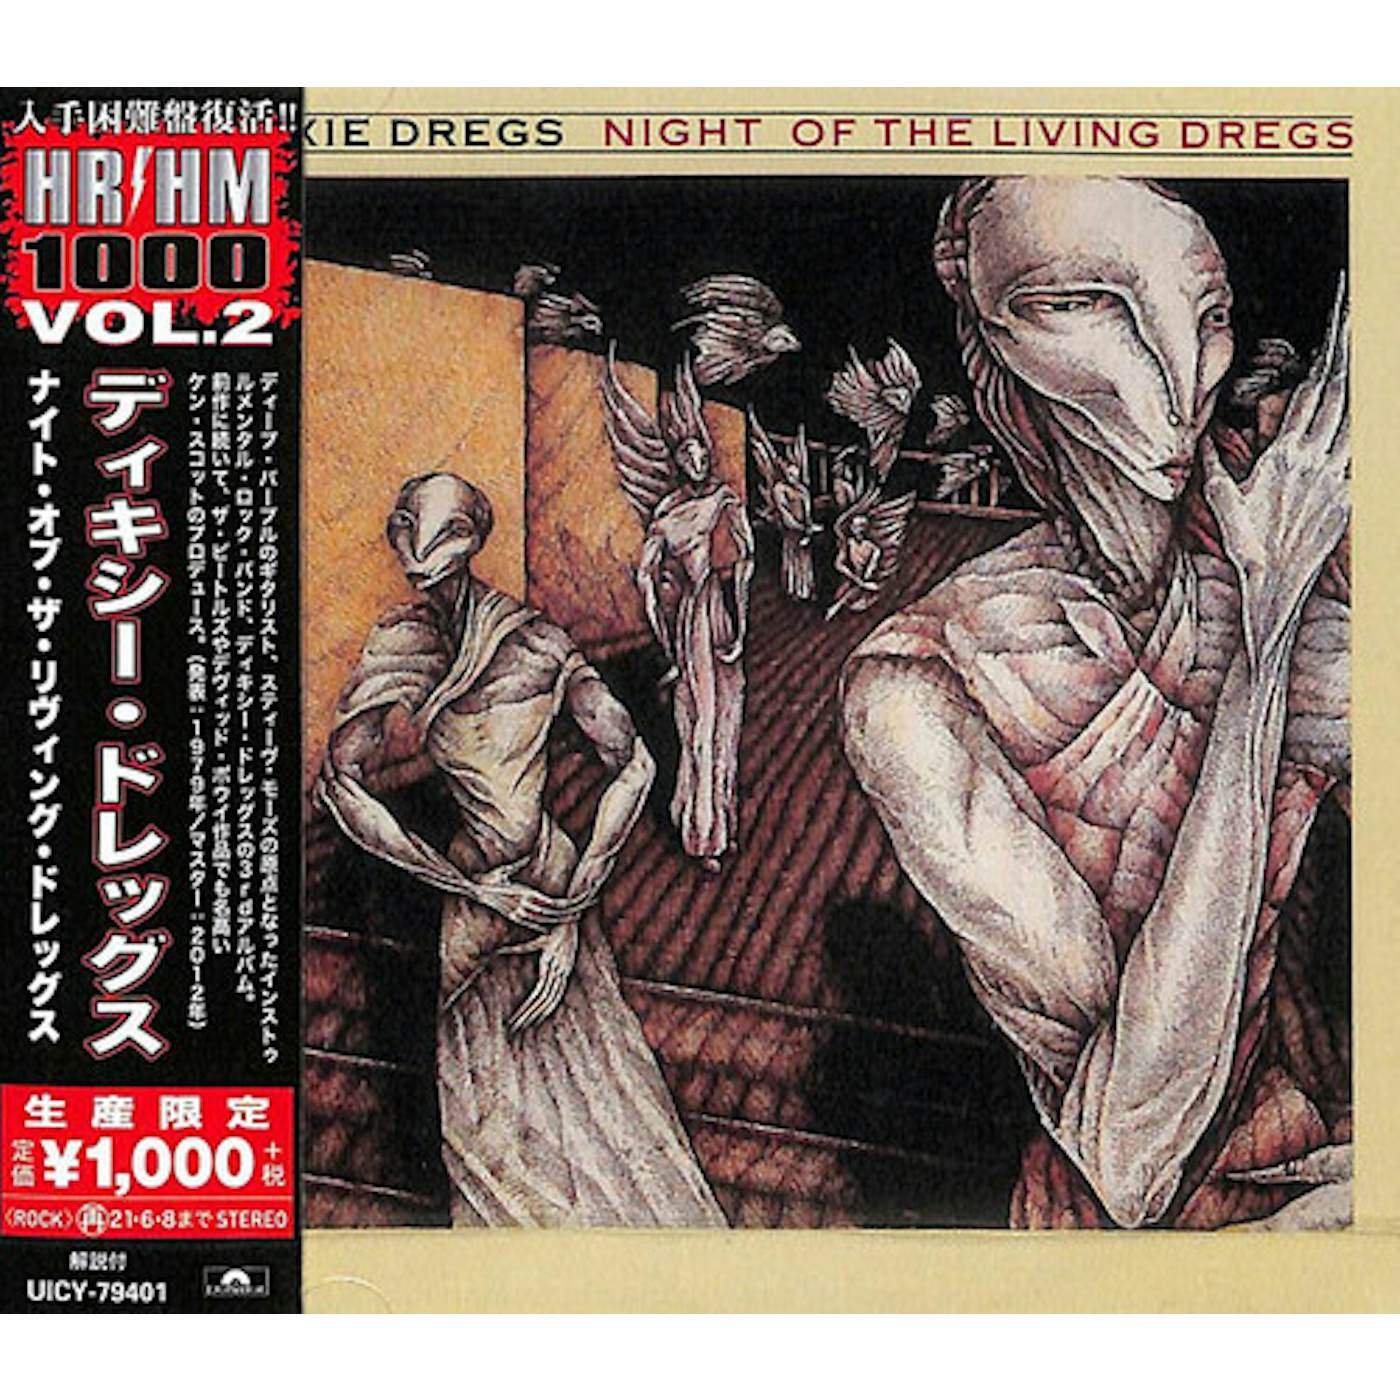 Dixie Dregs NIGHT OF THE LIVING DREGS CD